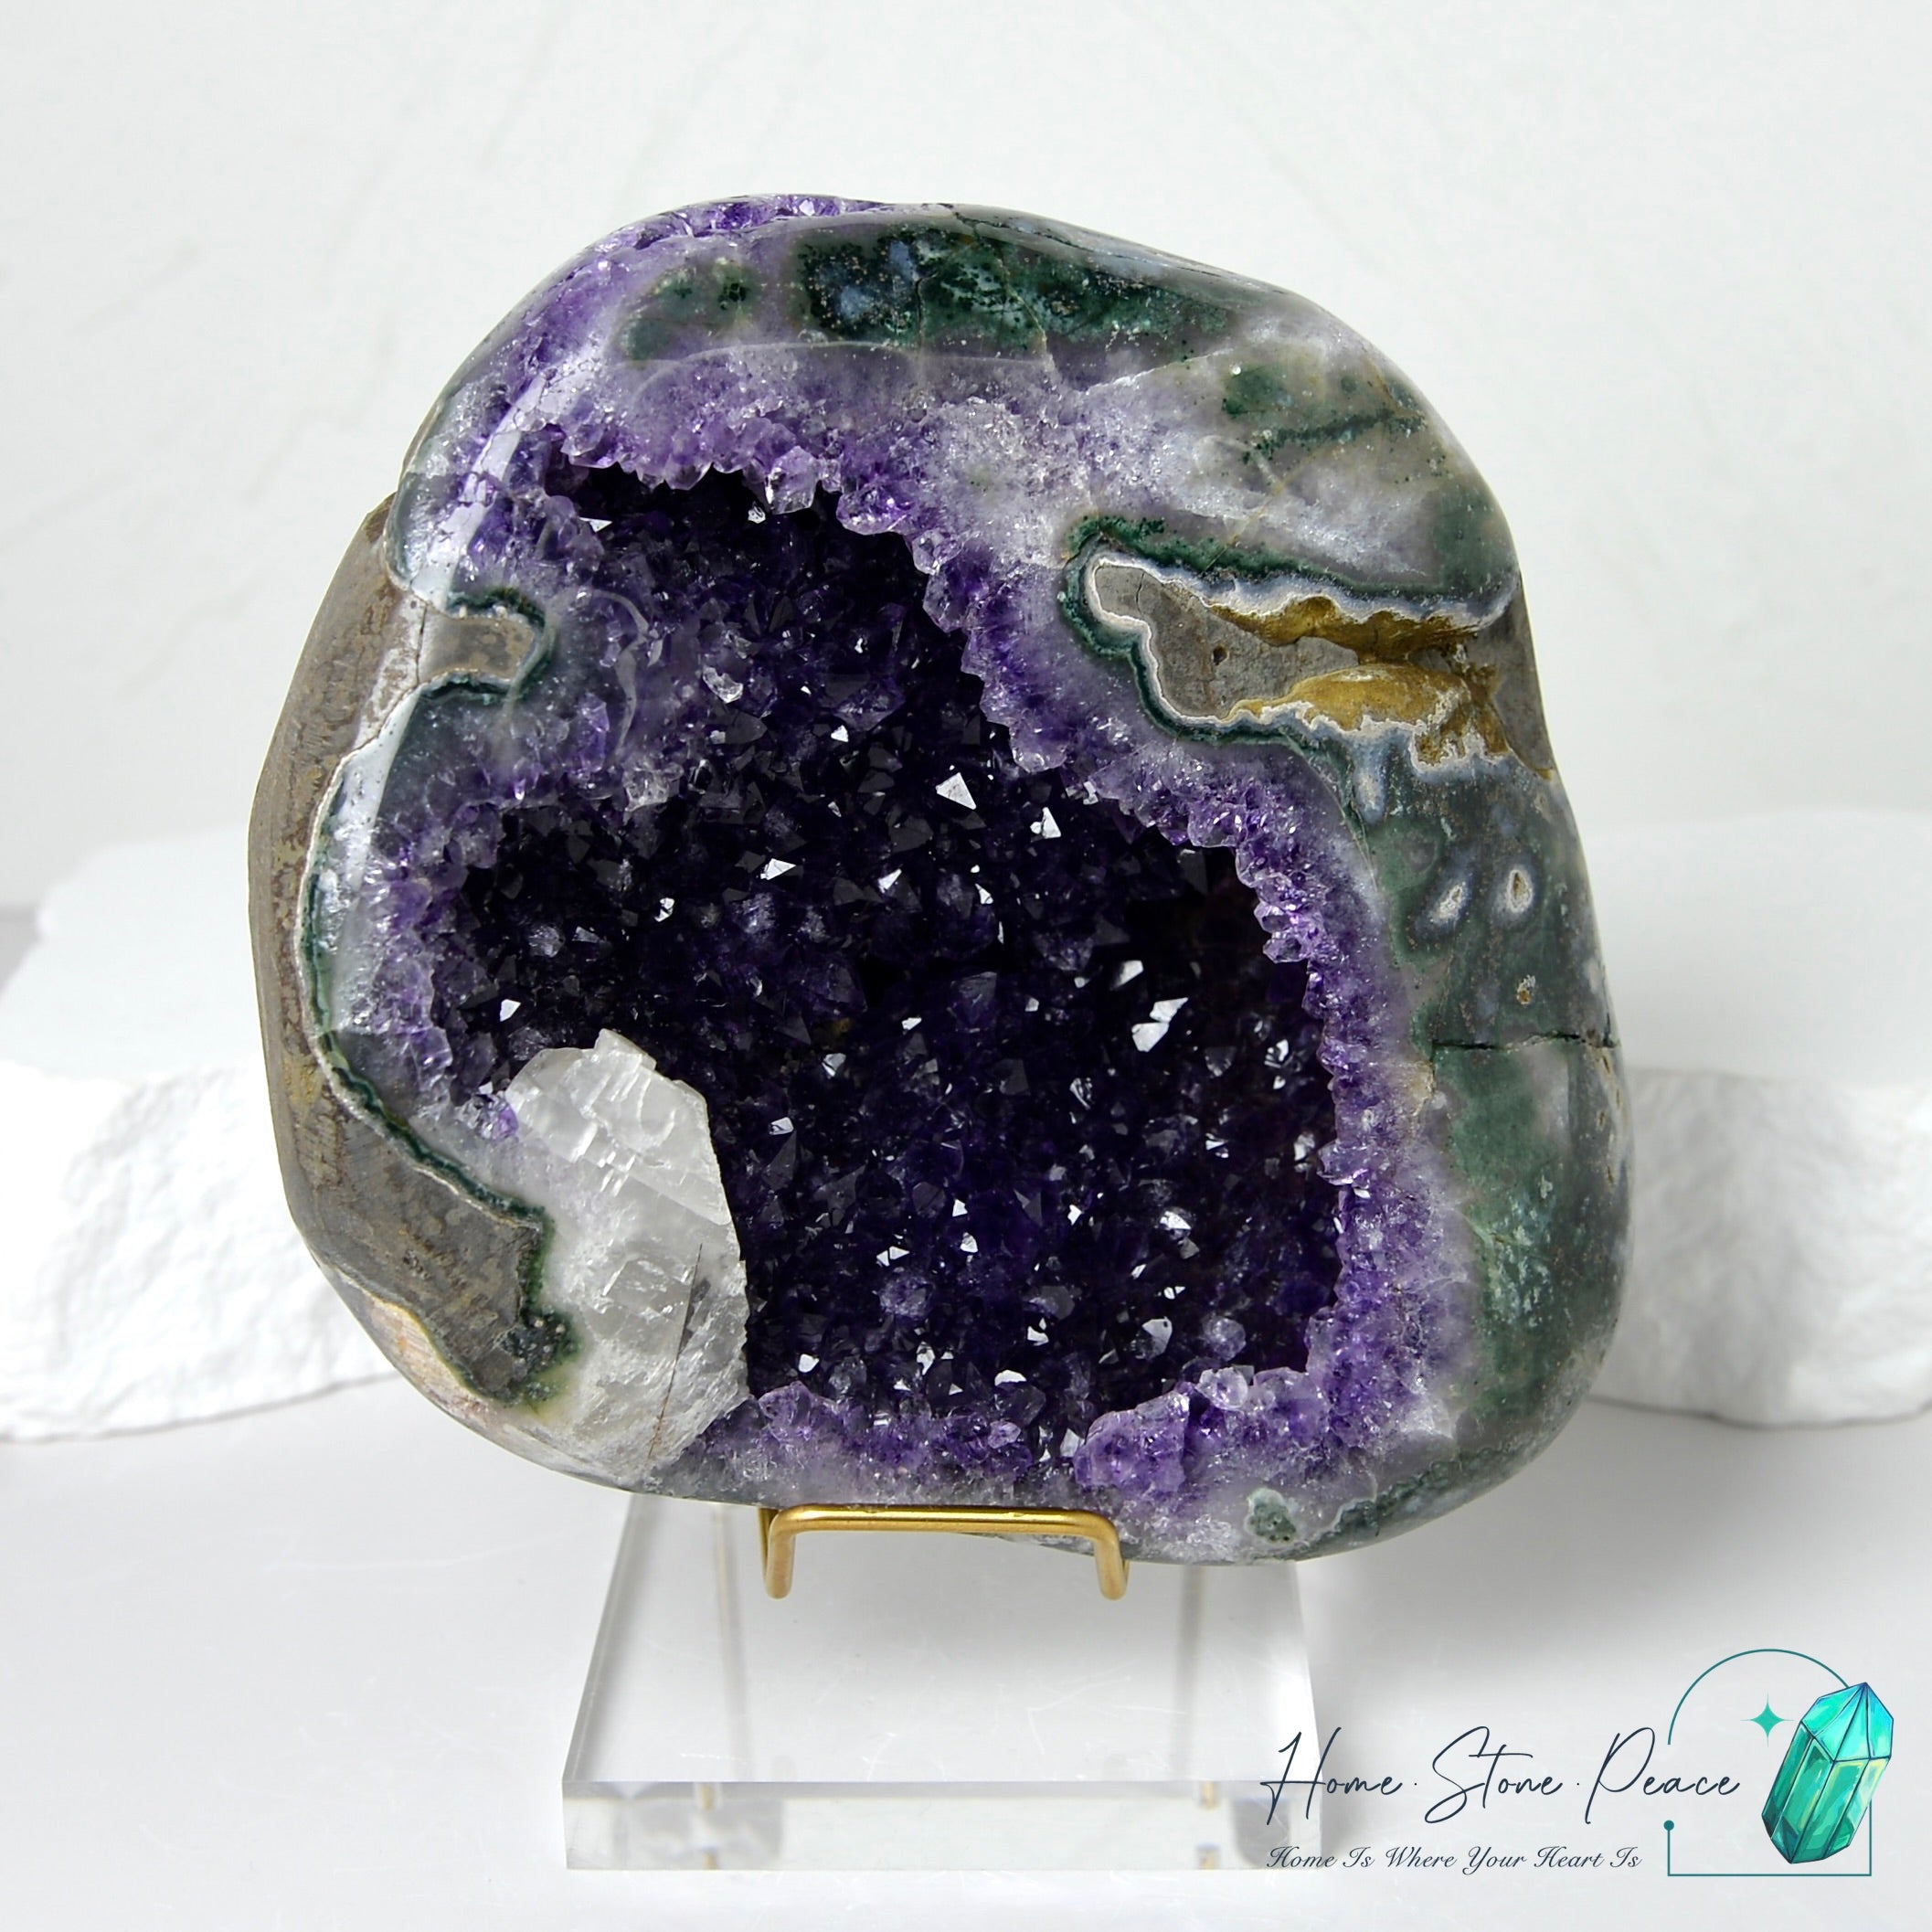 Amethyst and Calcite Geode 紫水晶方解石共生晶洞